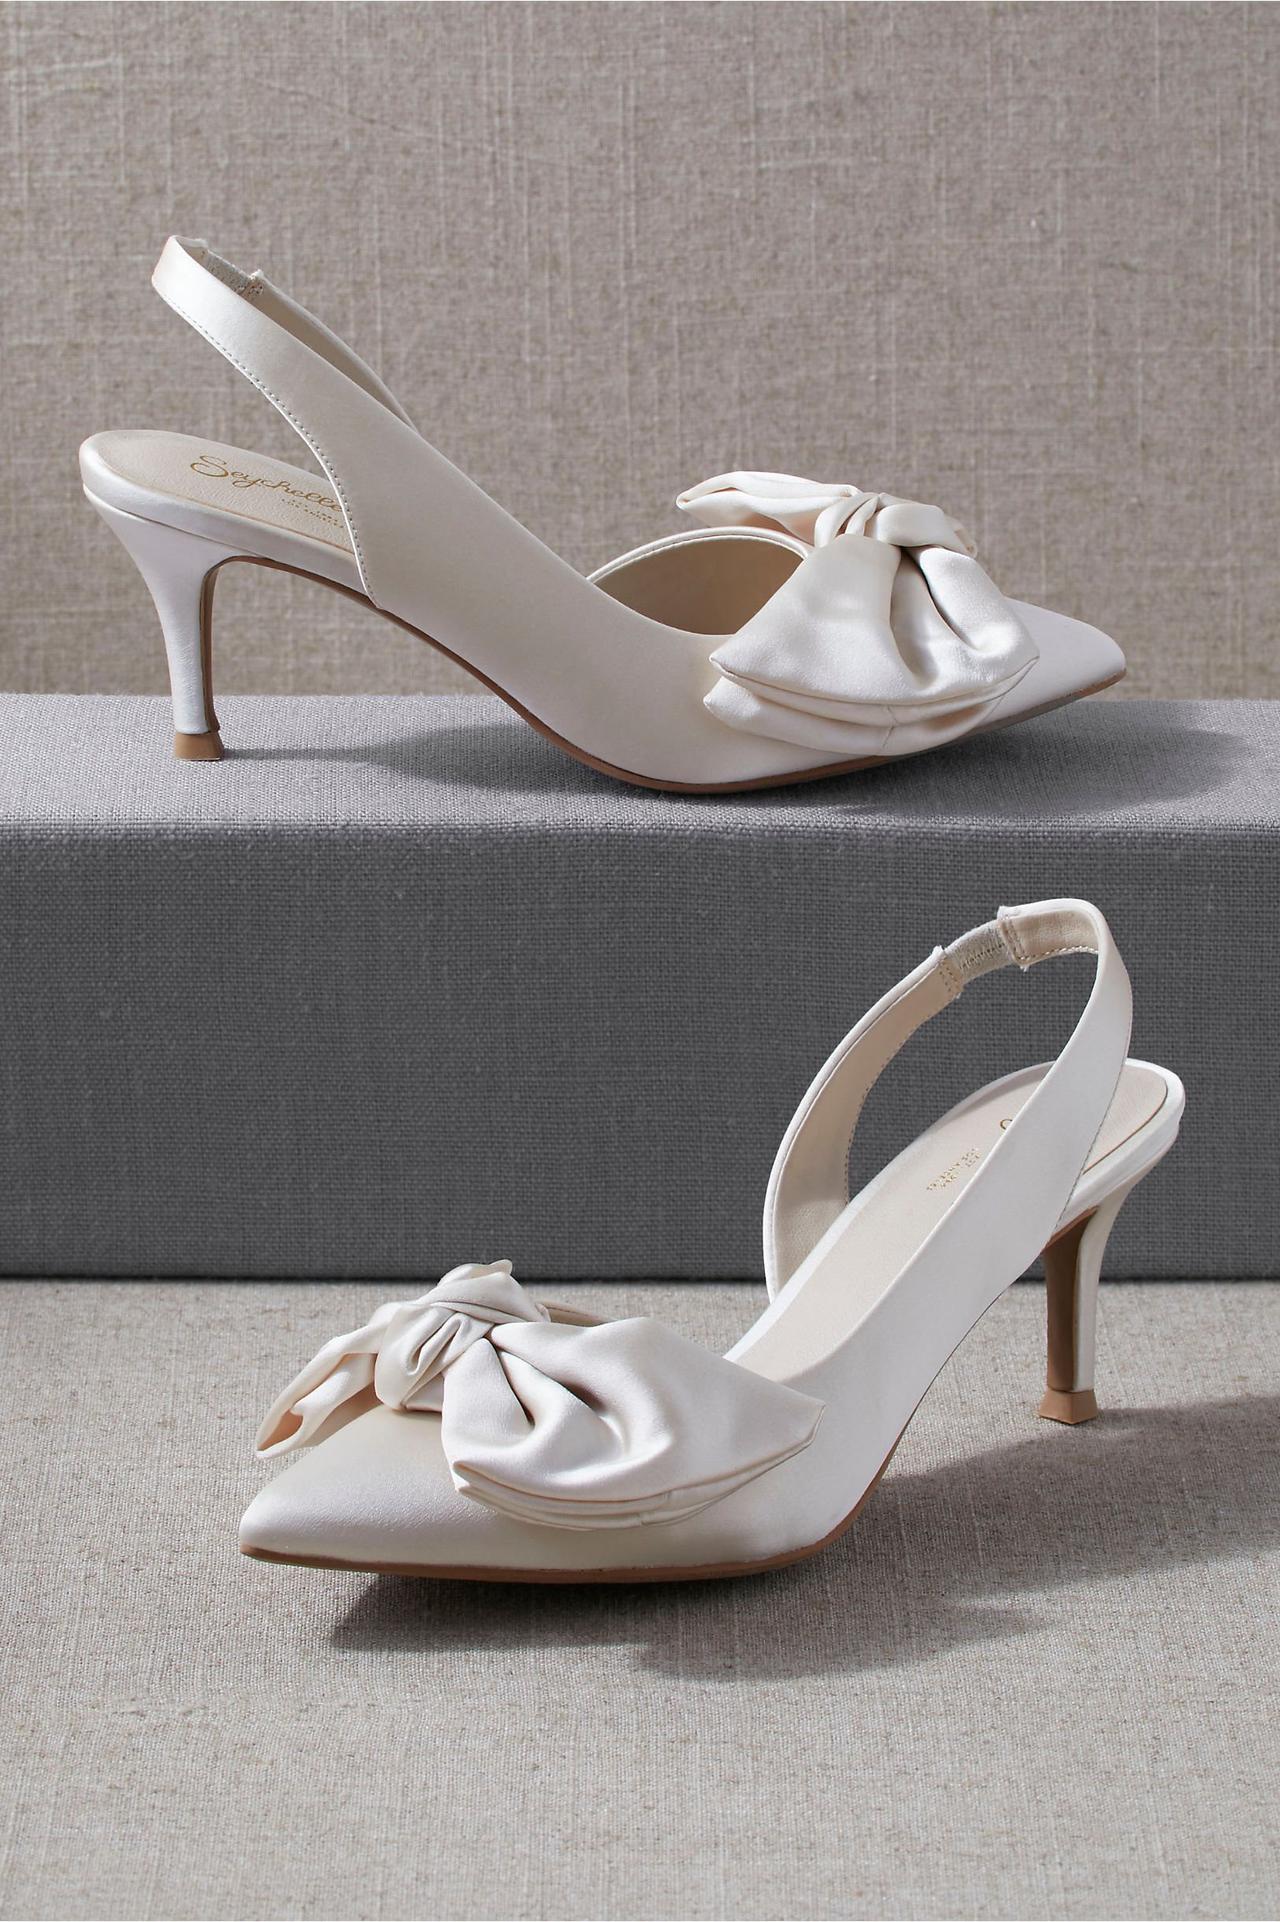 Good-memories pumps Sandals elegan peep Toe Sweet Beaded Summer Shoes Party Wedding Shoes Comfortable high Heel Shoes,White,6